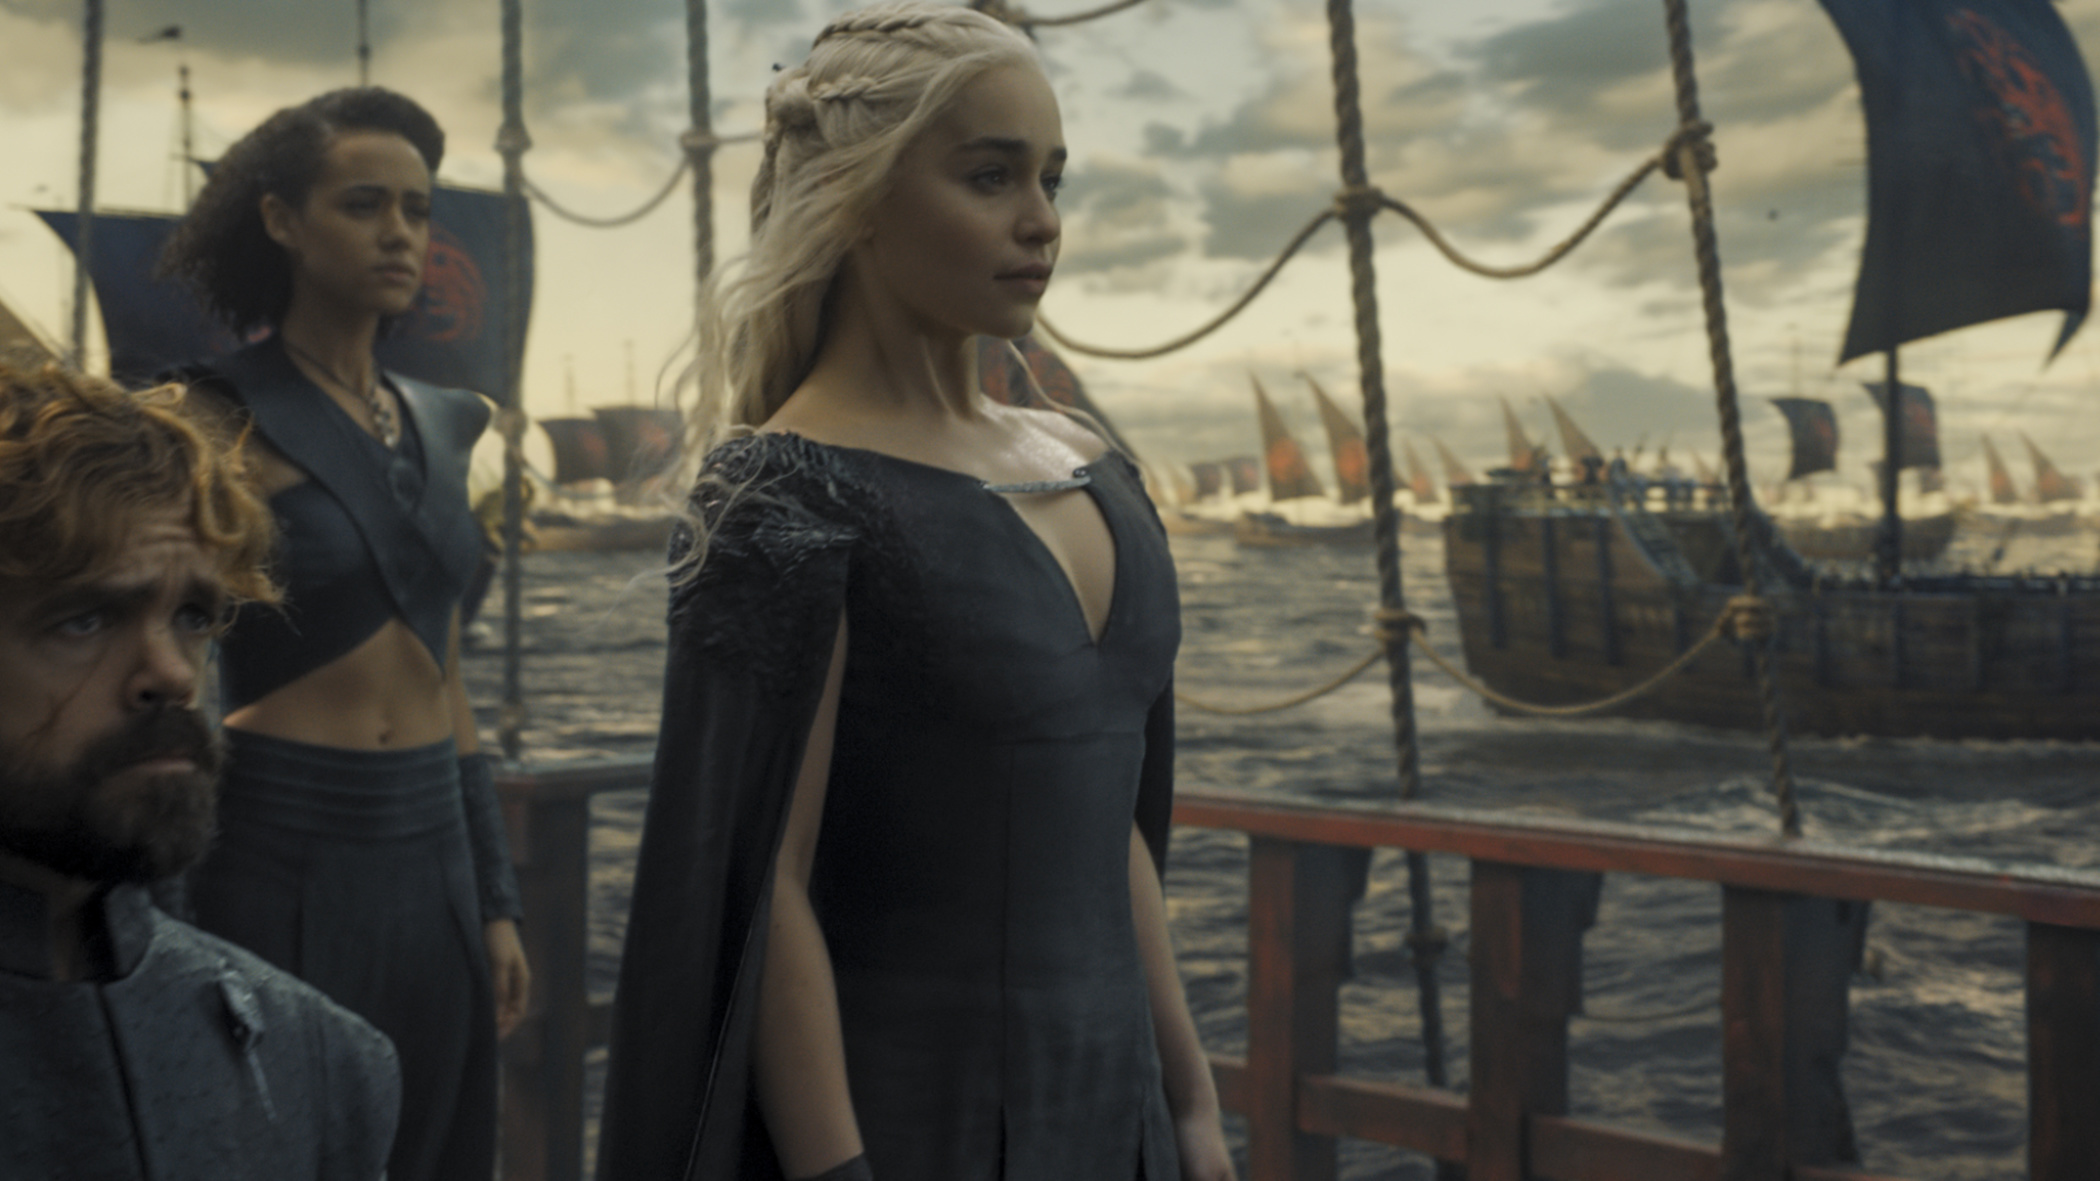 Emilia Clarke as Daenerys Targaryen in HBO's Game of Thrones